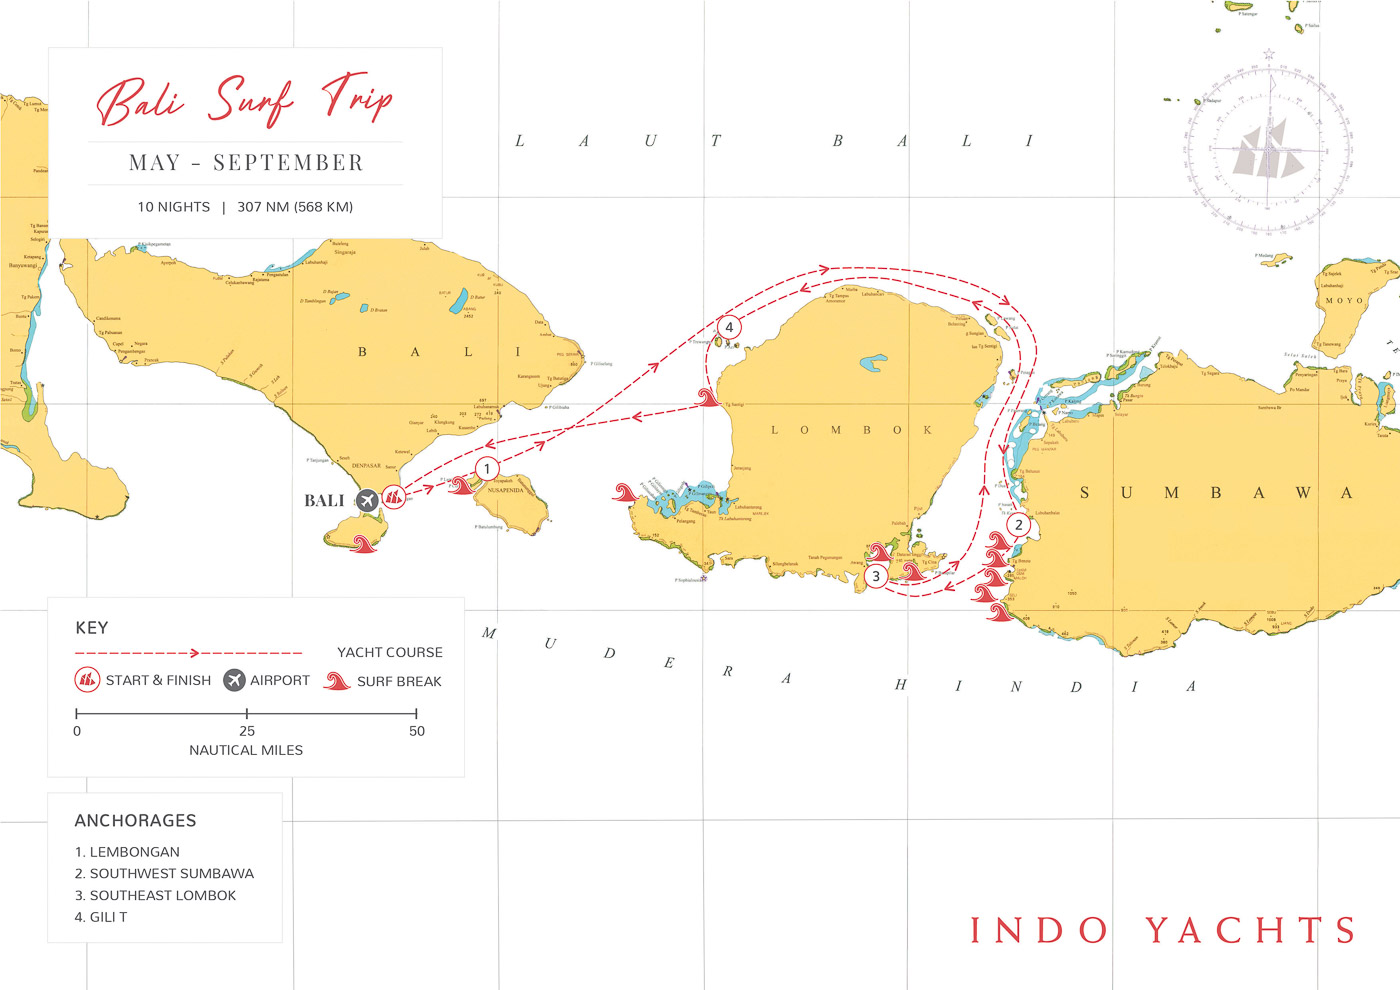 Private Surf Trip 10-night Bali to Lombok to Sumbawa yacht charter itinerary map